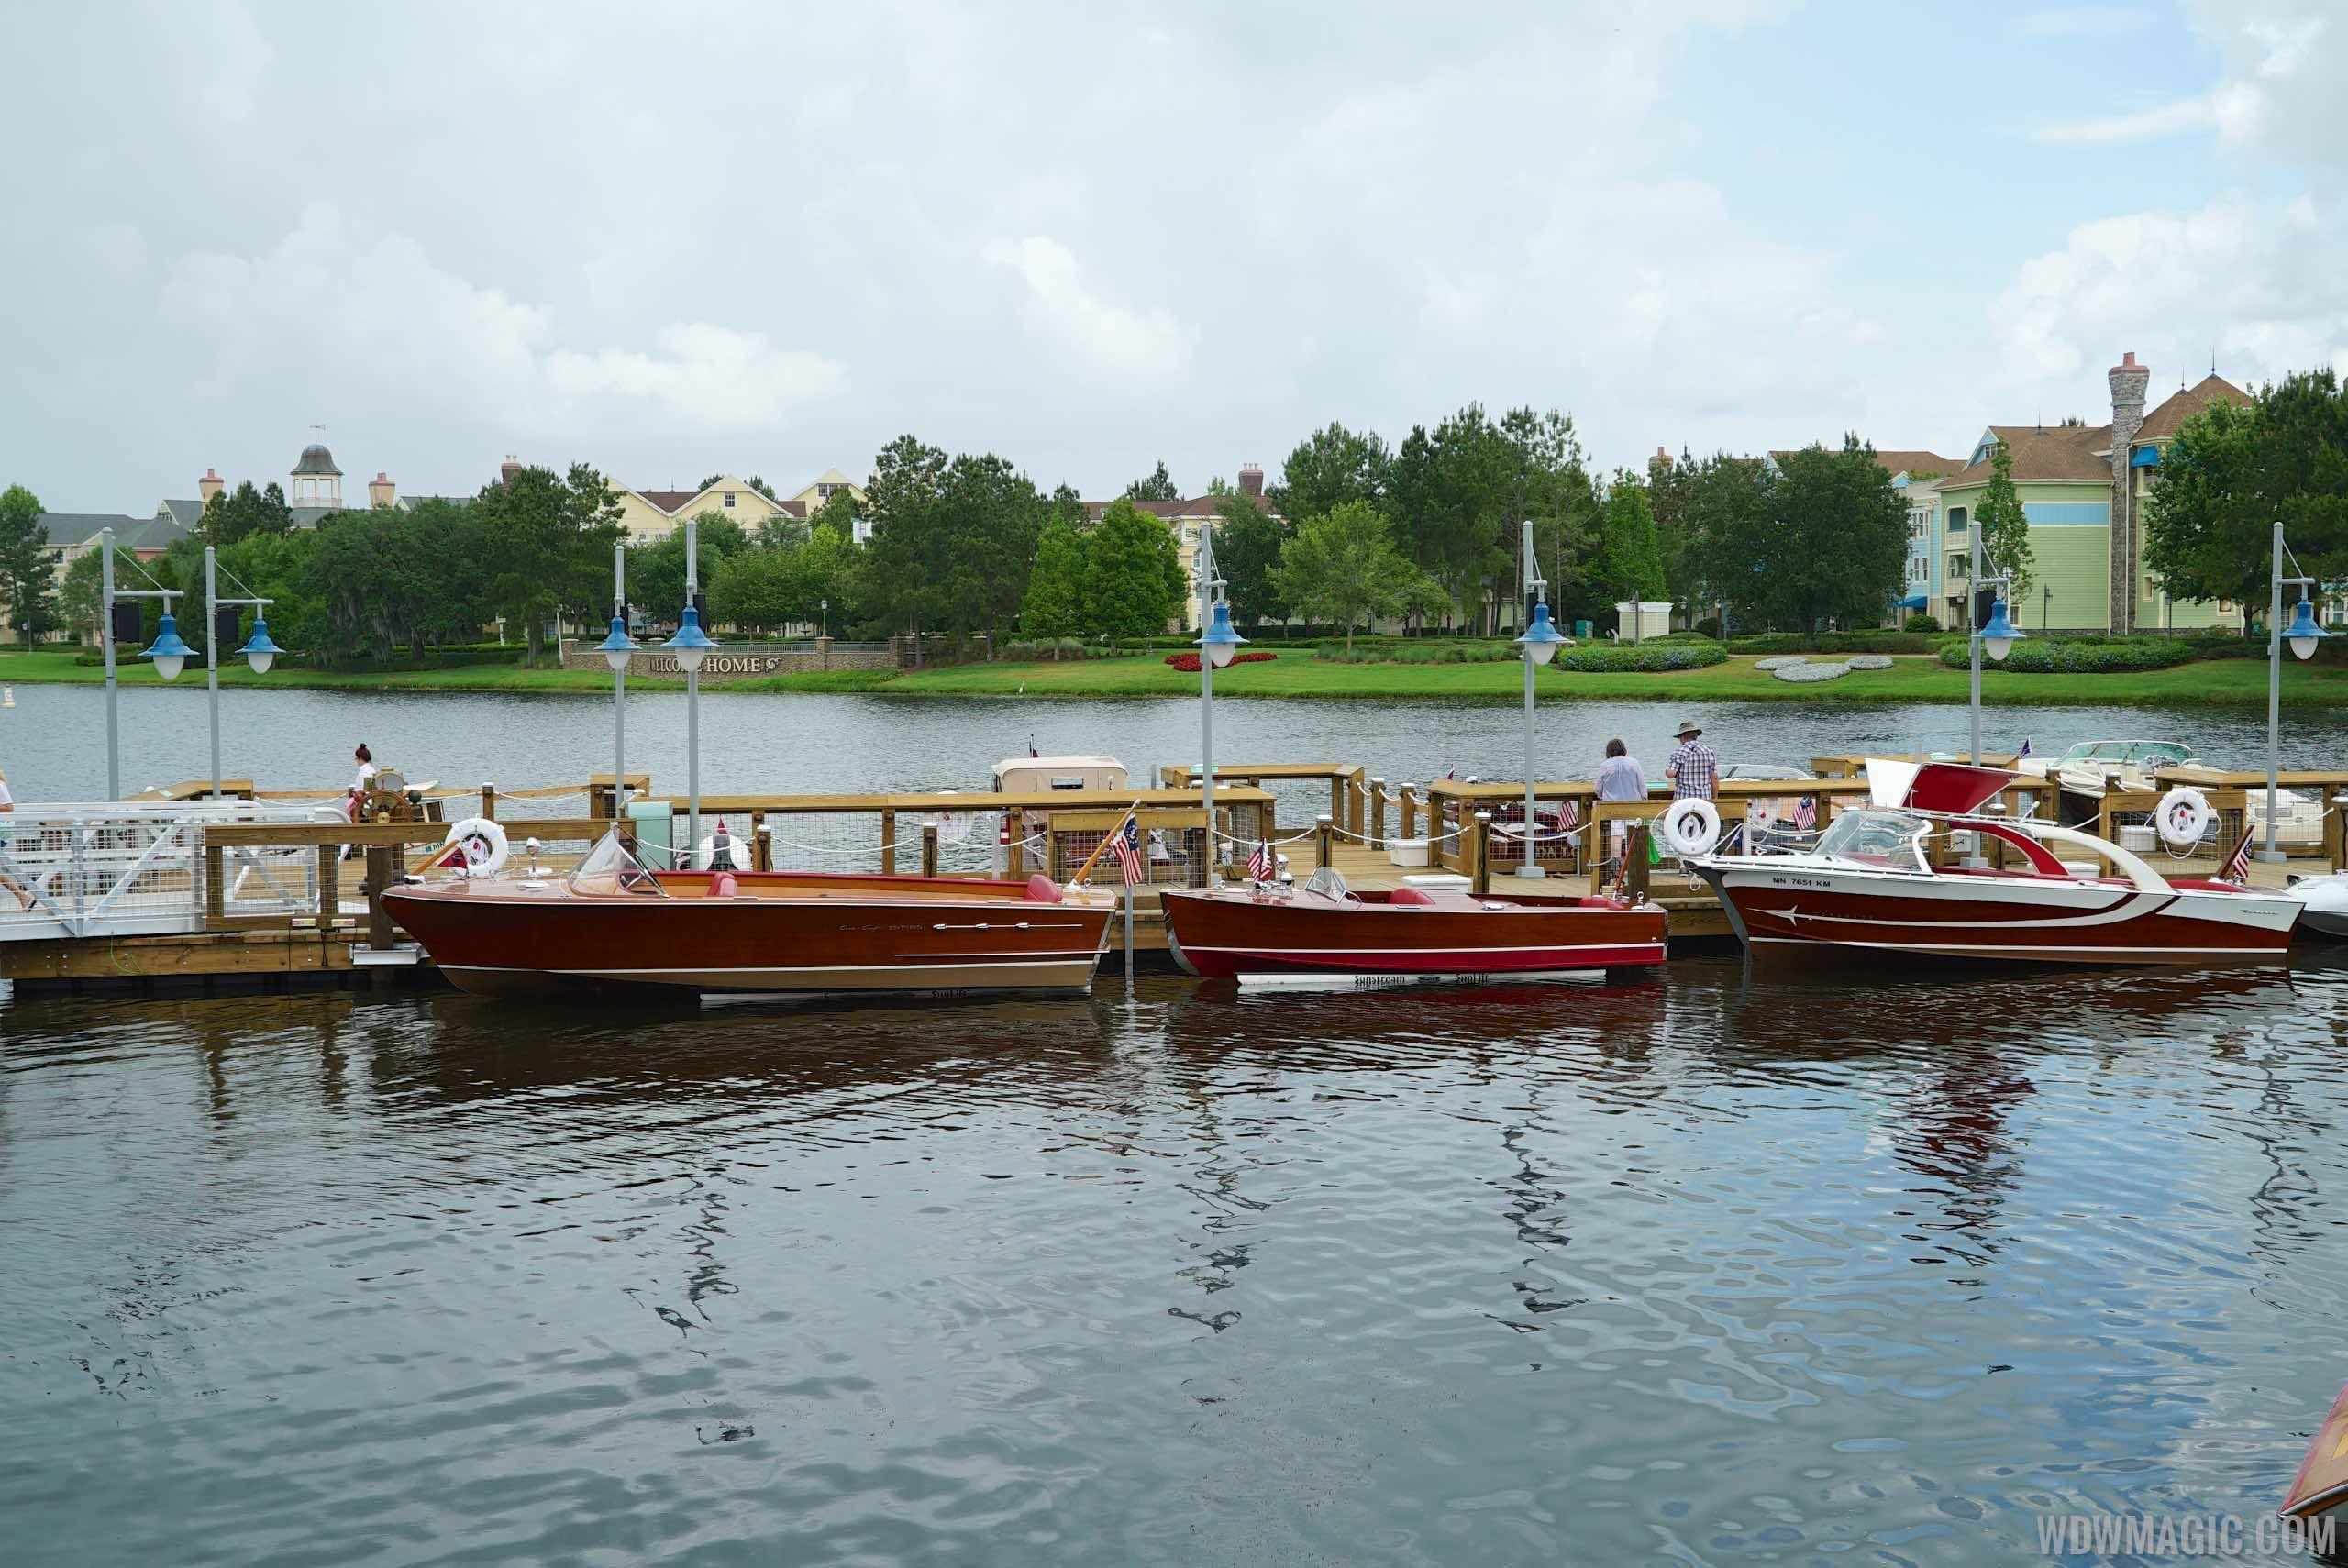 The BOATHOUSE - The watercraft fleet